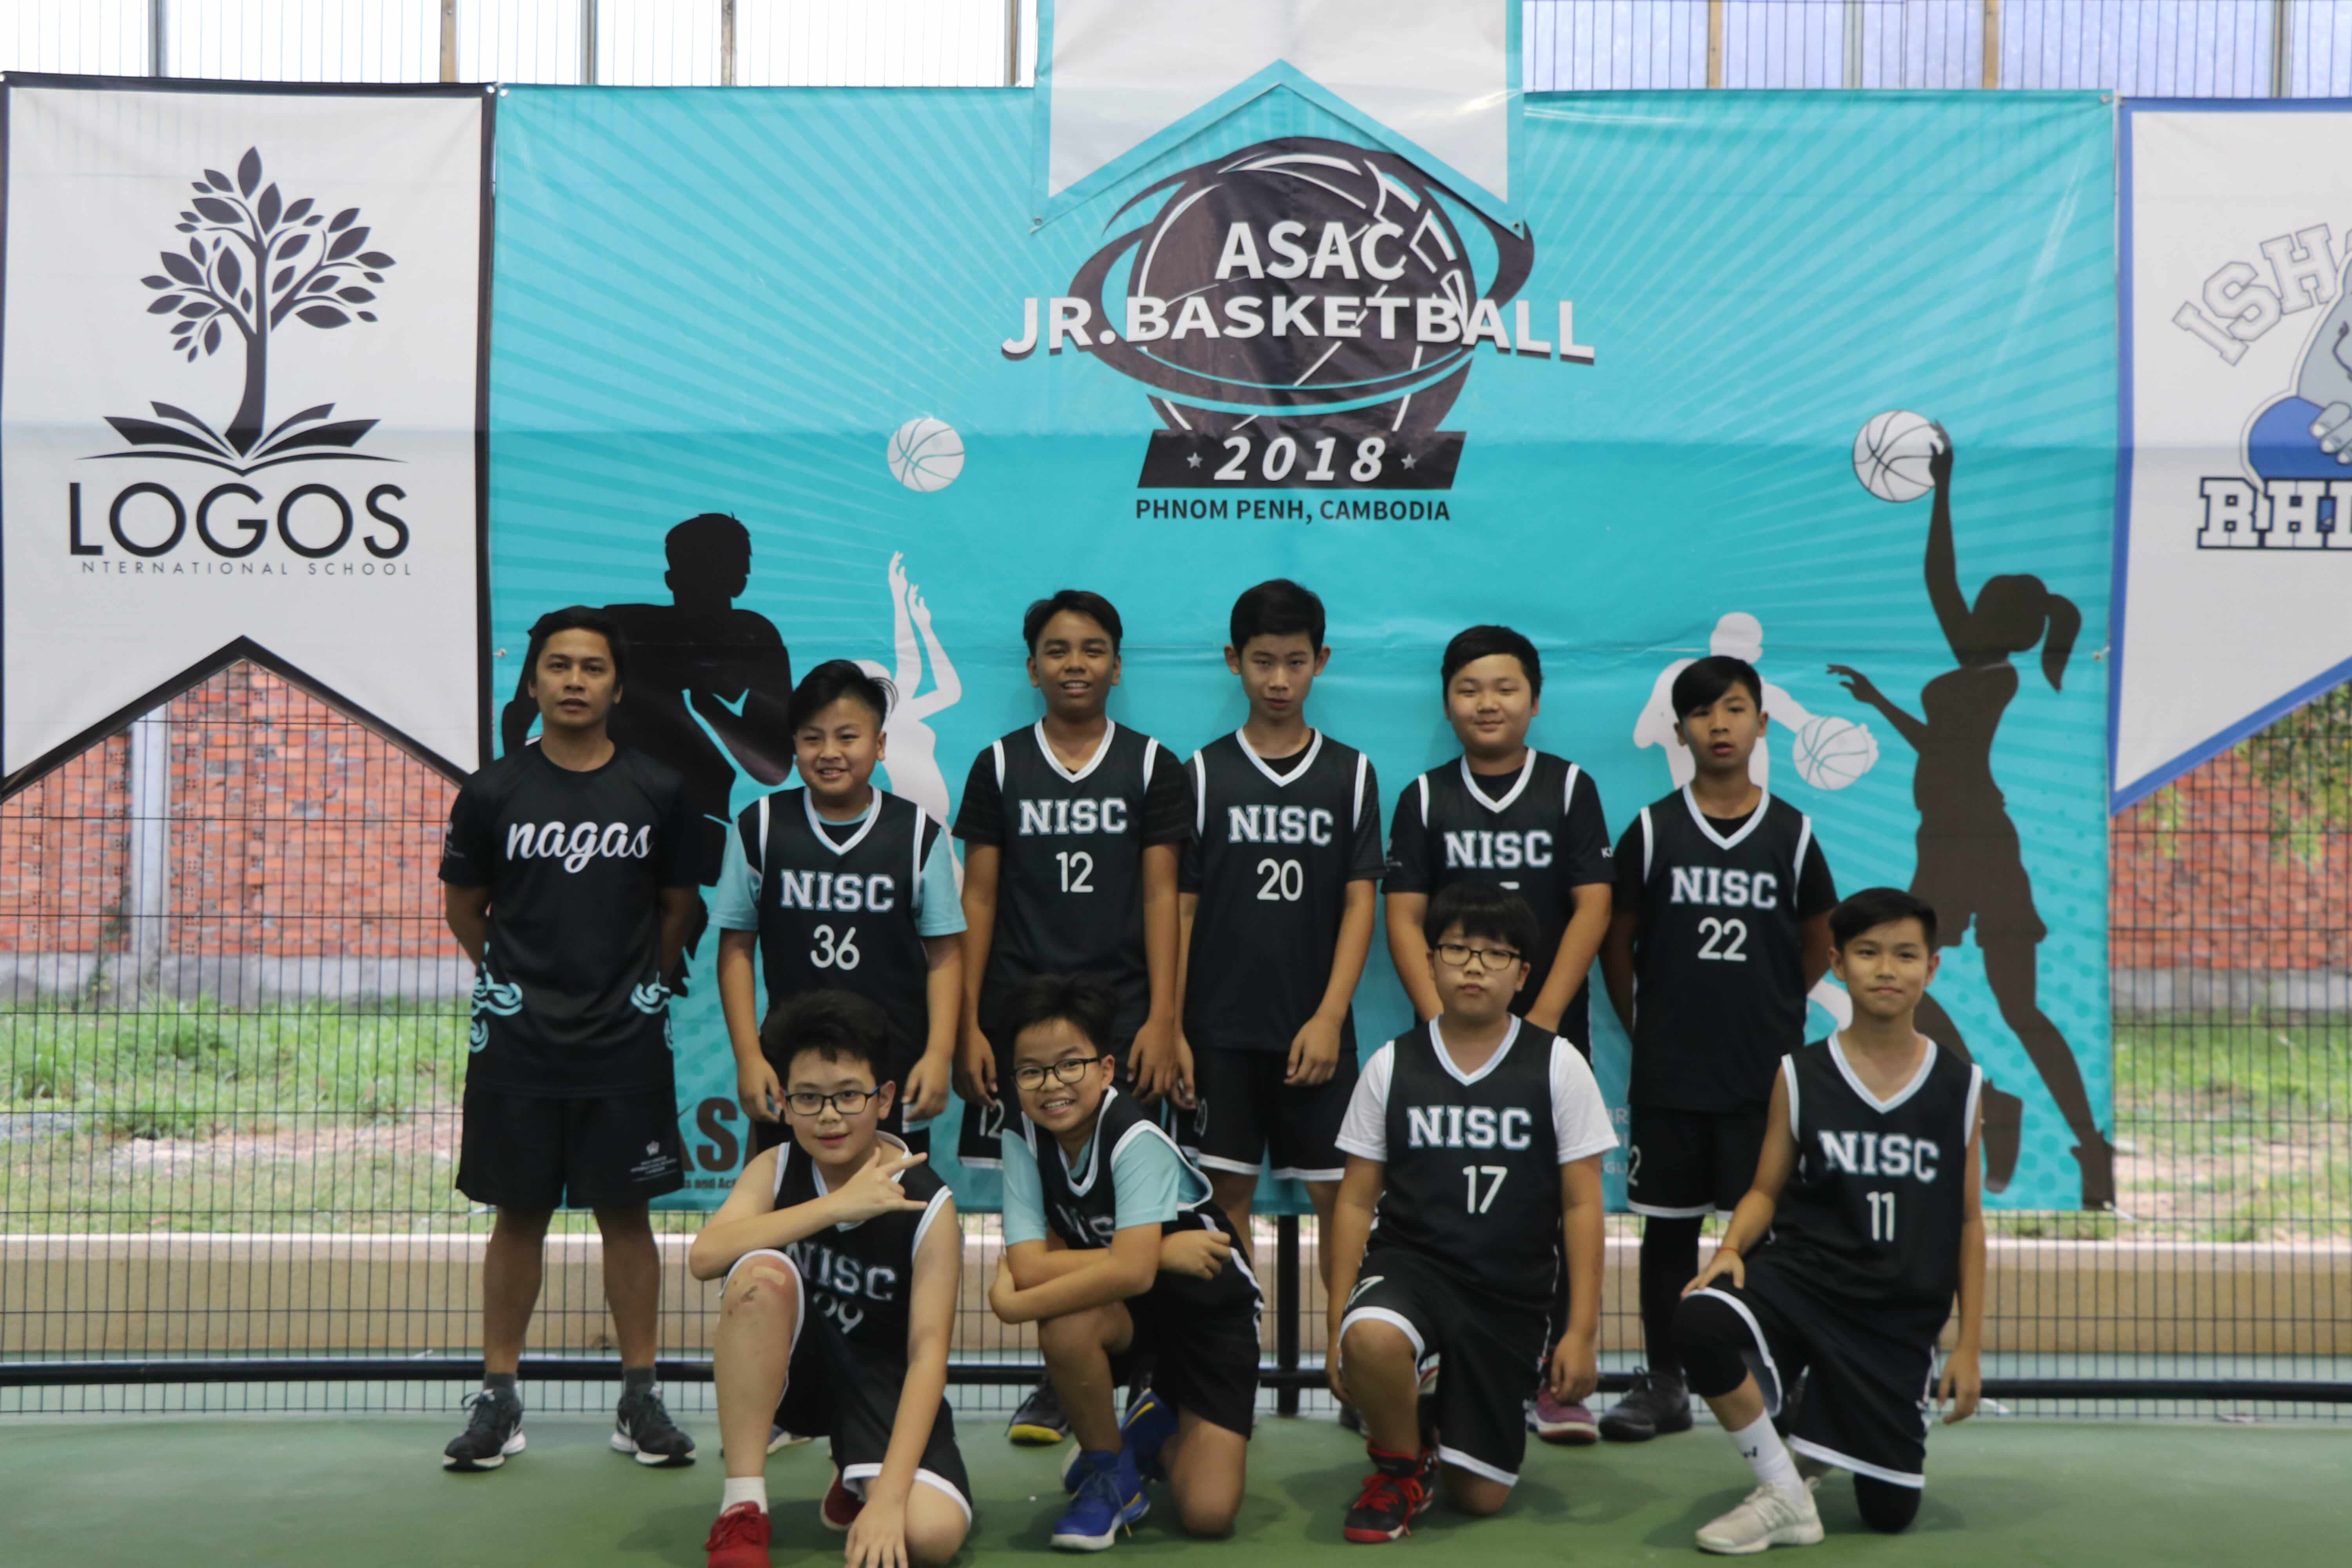 Nagas show fighting spirit at inaugural ASAC Junior Basketball tournament - nagas-show-fighting-spirit-at-inaugural-asac-junior-basketball-tournament